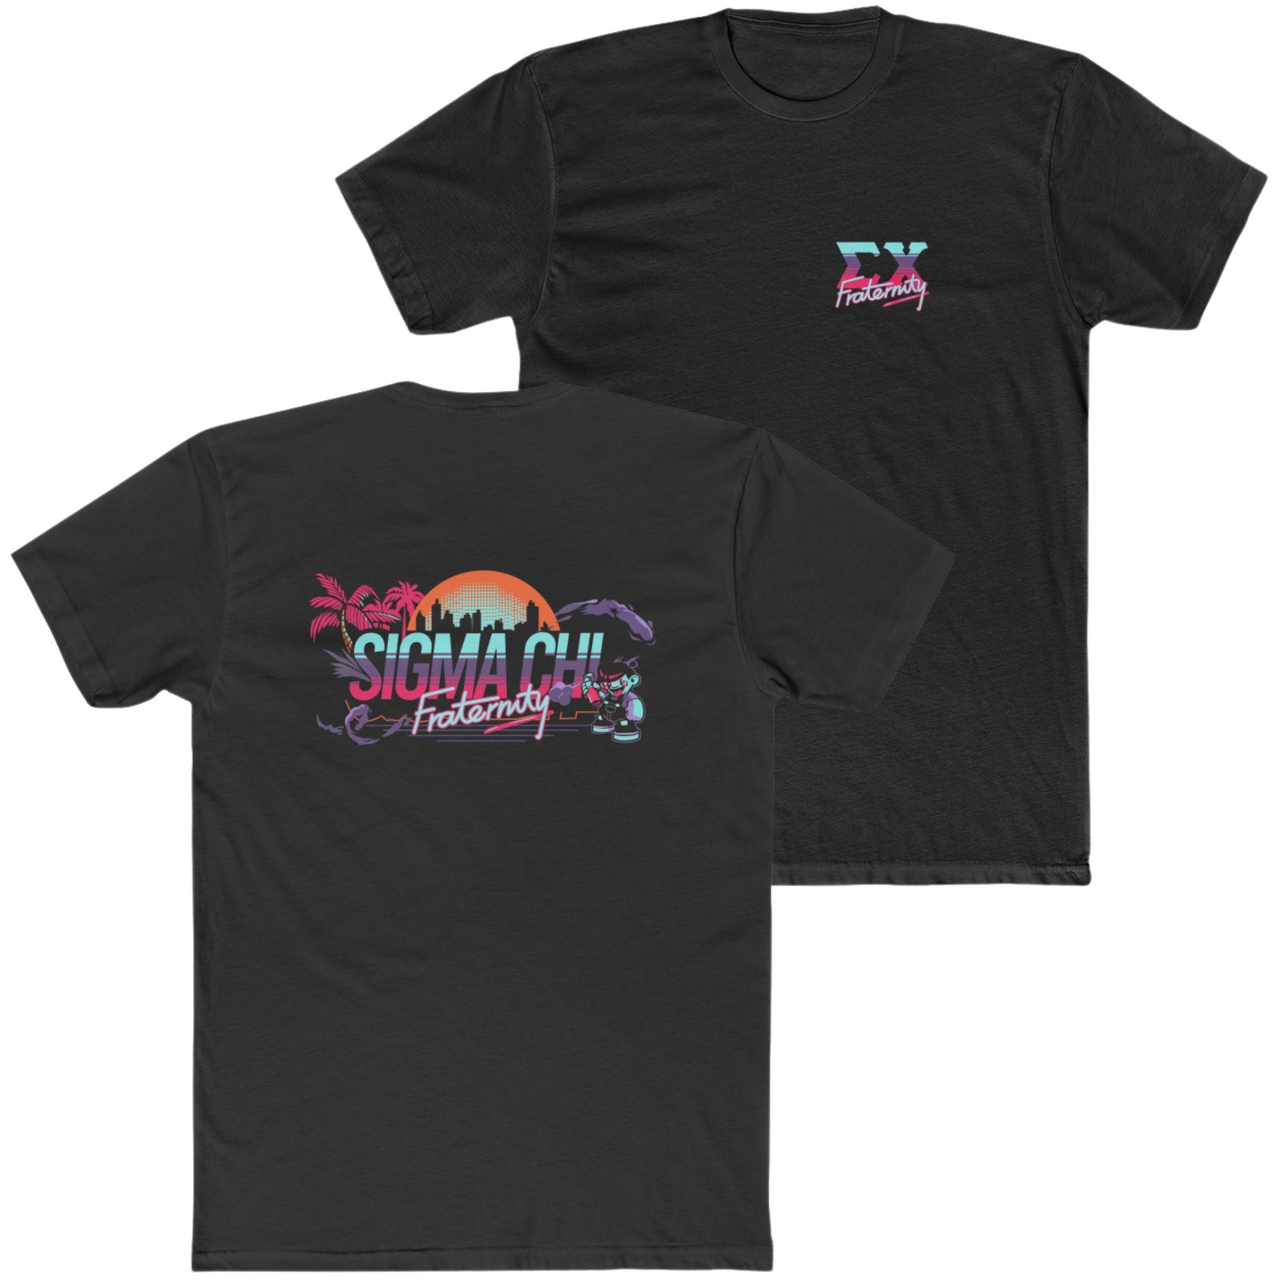 Black Sigma Chi Graphic T-Shirt | Jump Street | Sigma Chi Fraternity Apparel